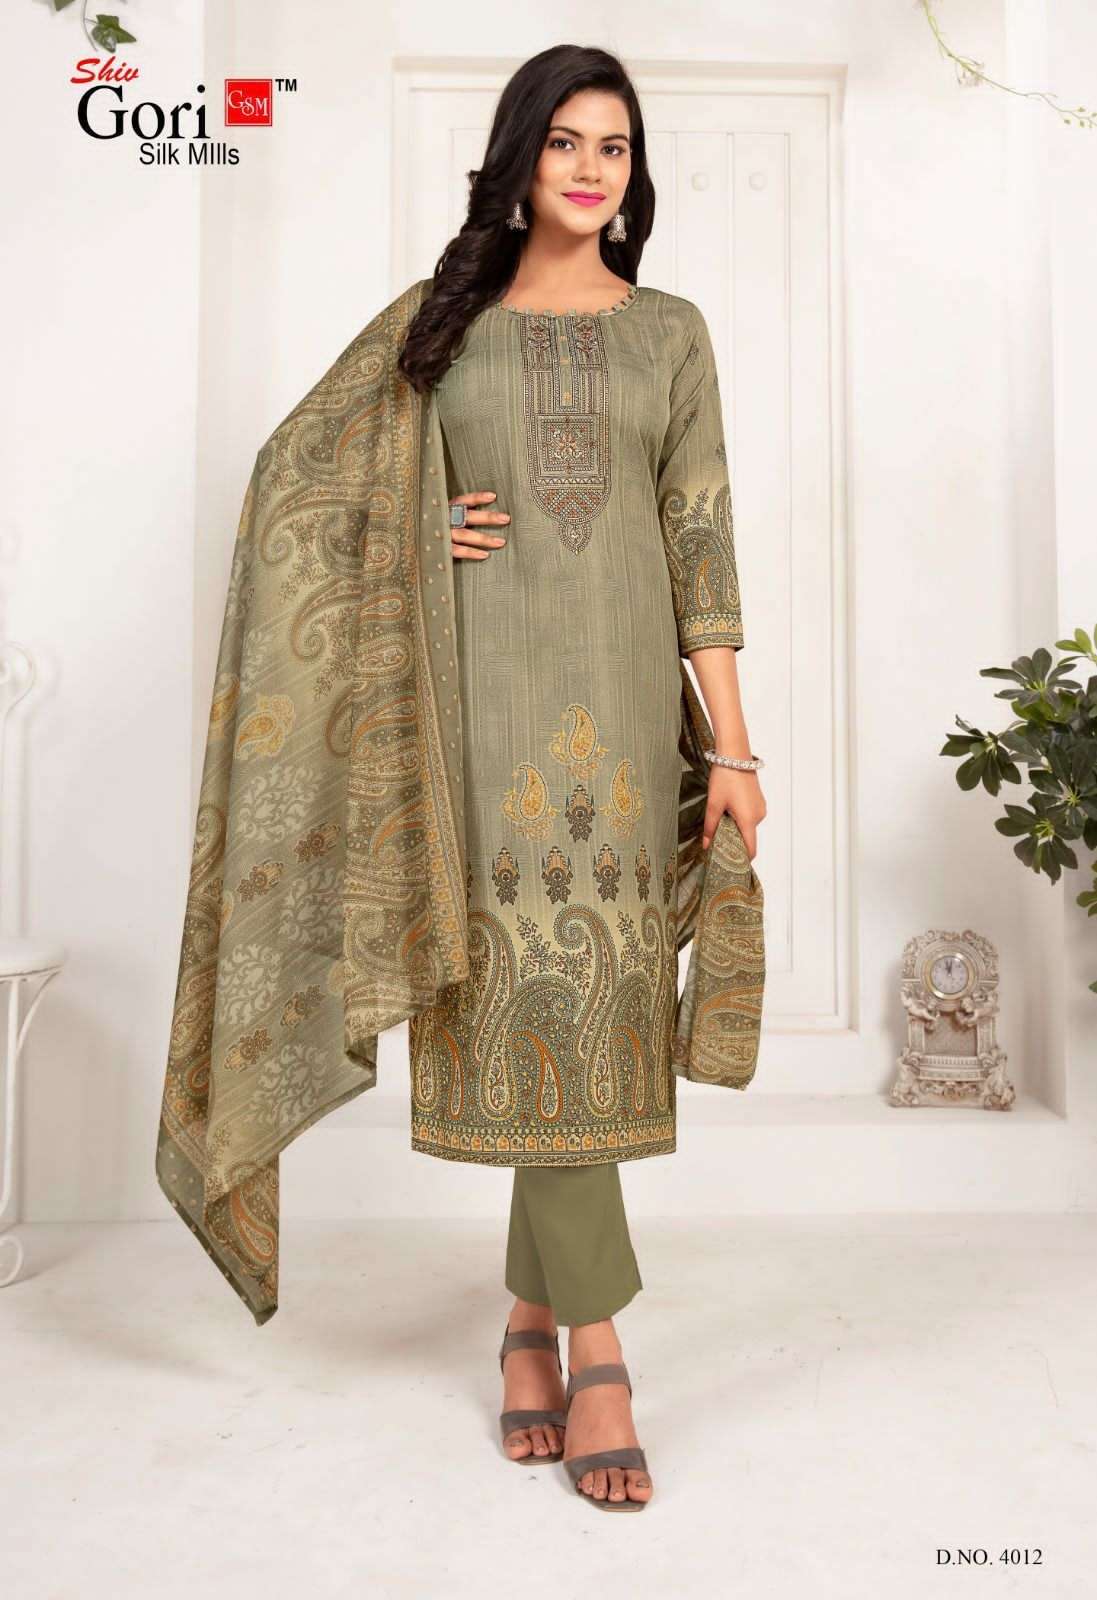 shiv gori silk mills sohni vol-4 4001-4012 series designer salwar kameez wholesaler surat gujarat 